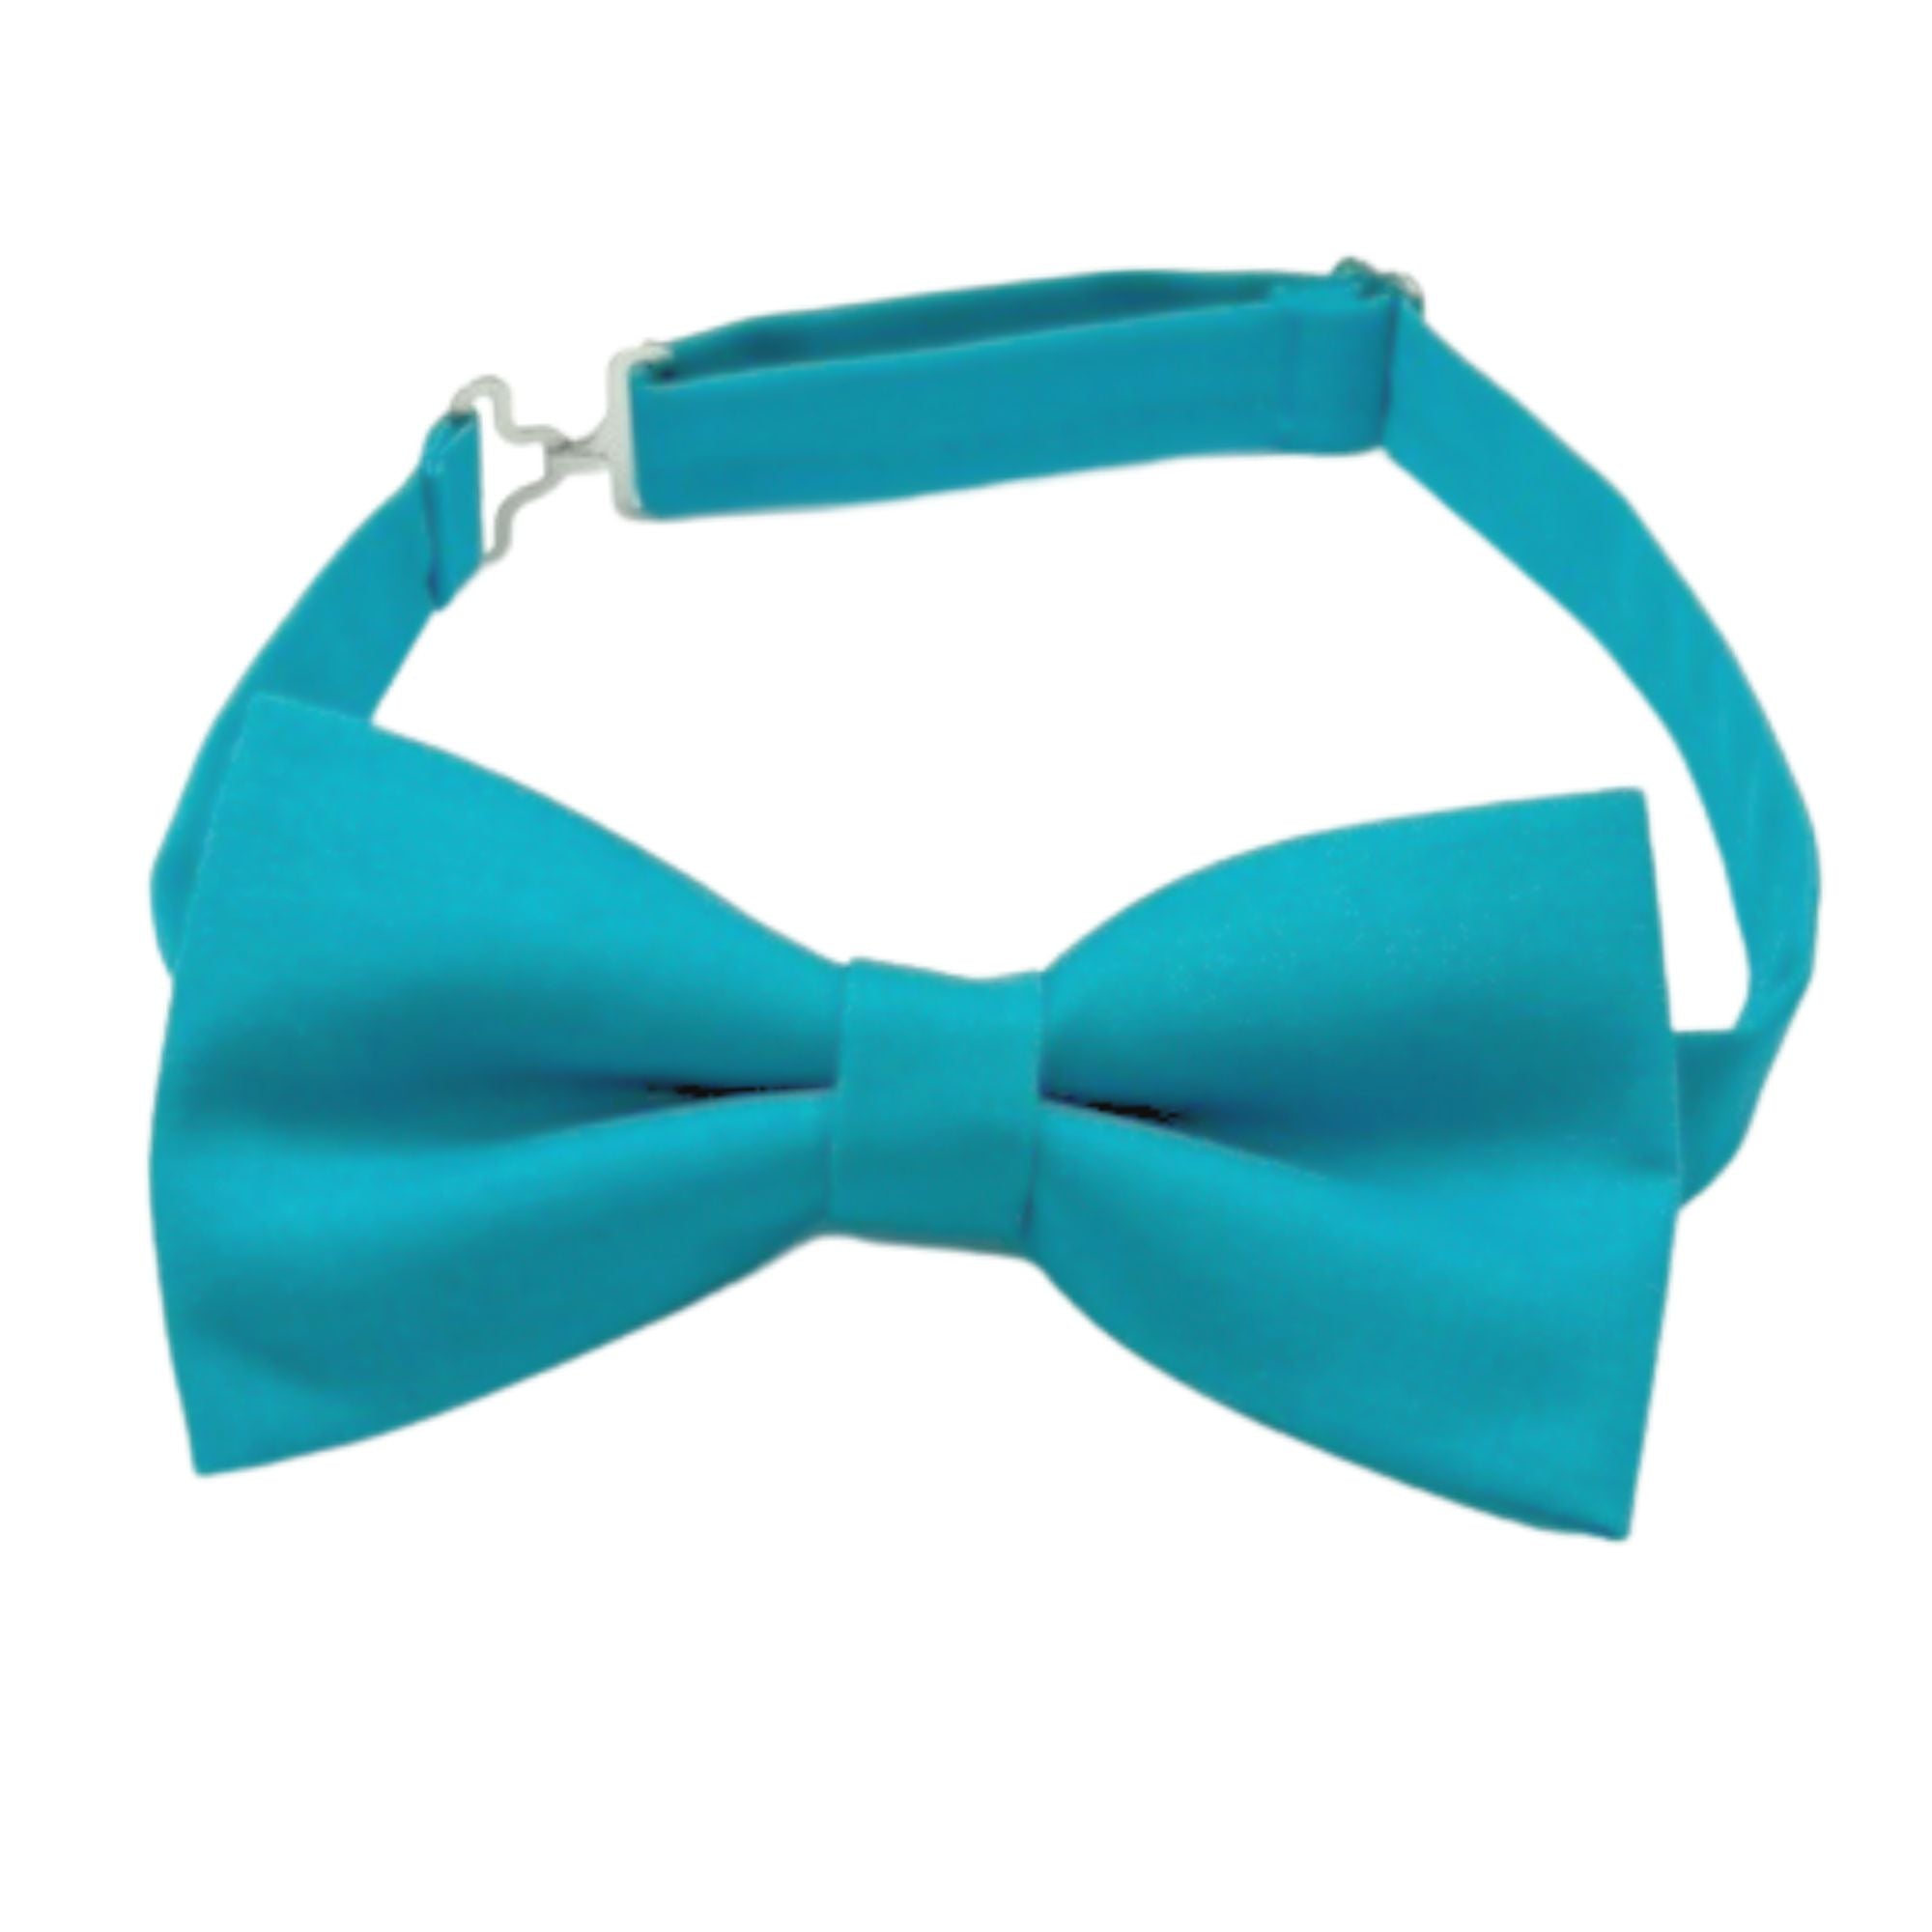 Aqua Blue Bow tie 